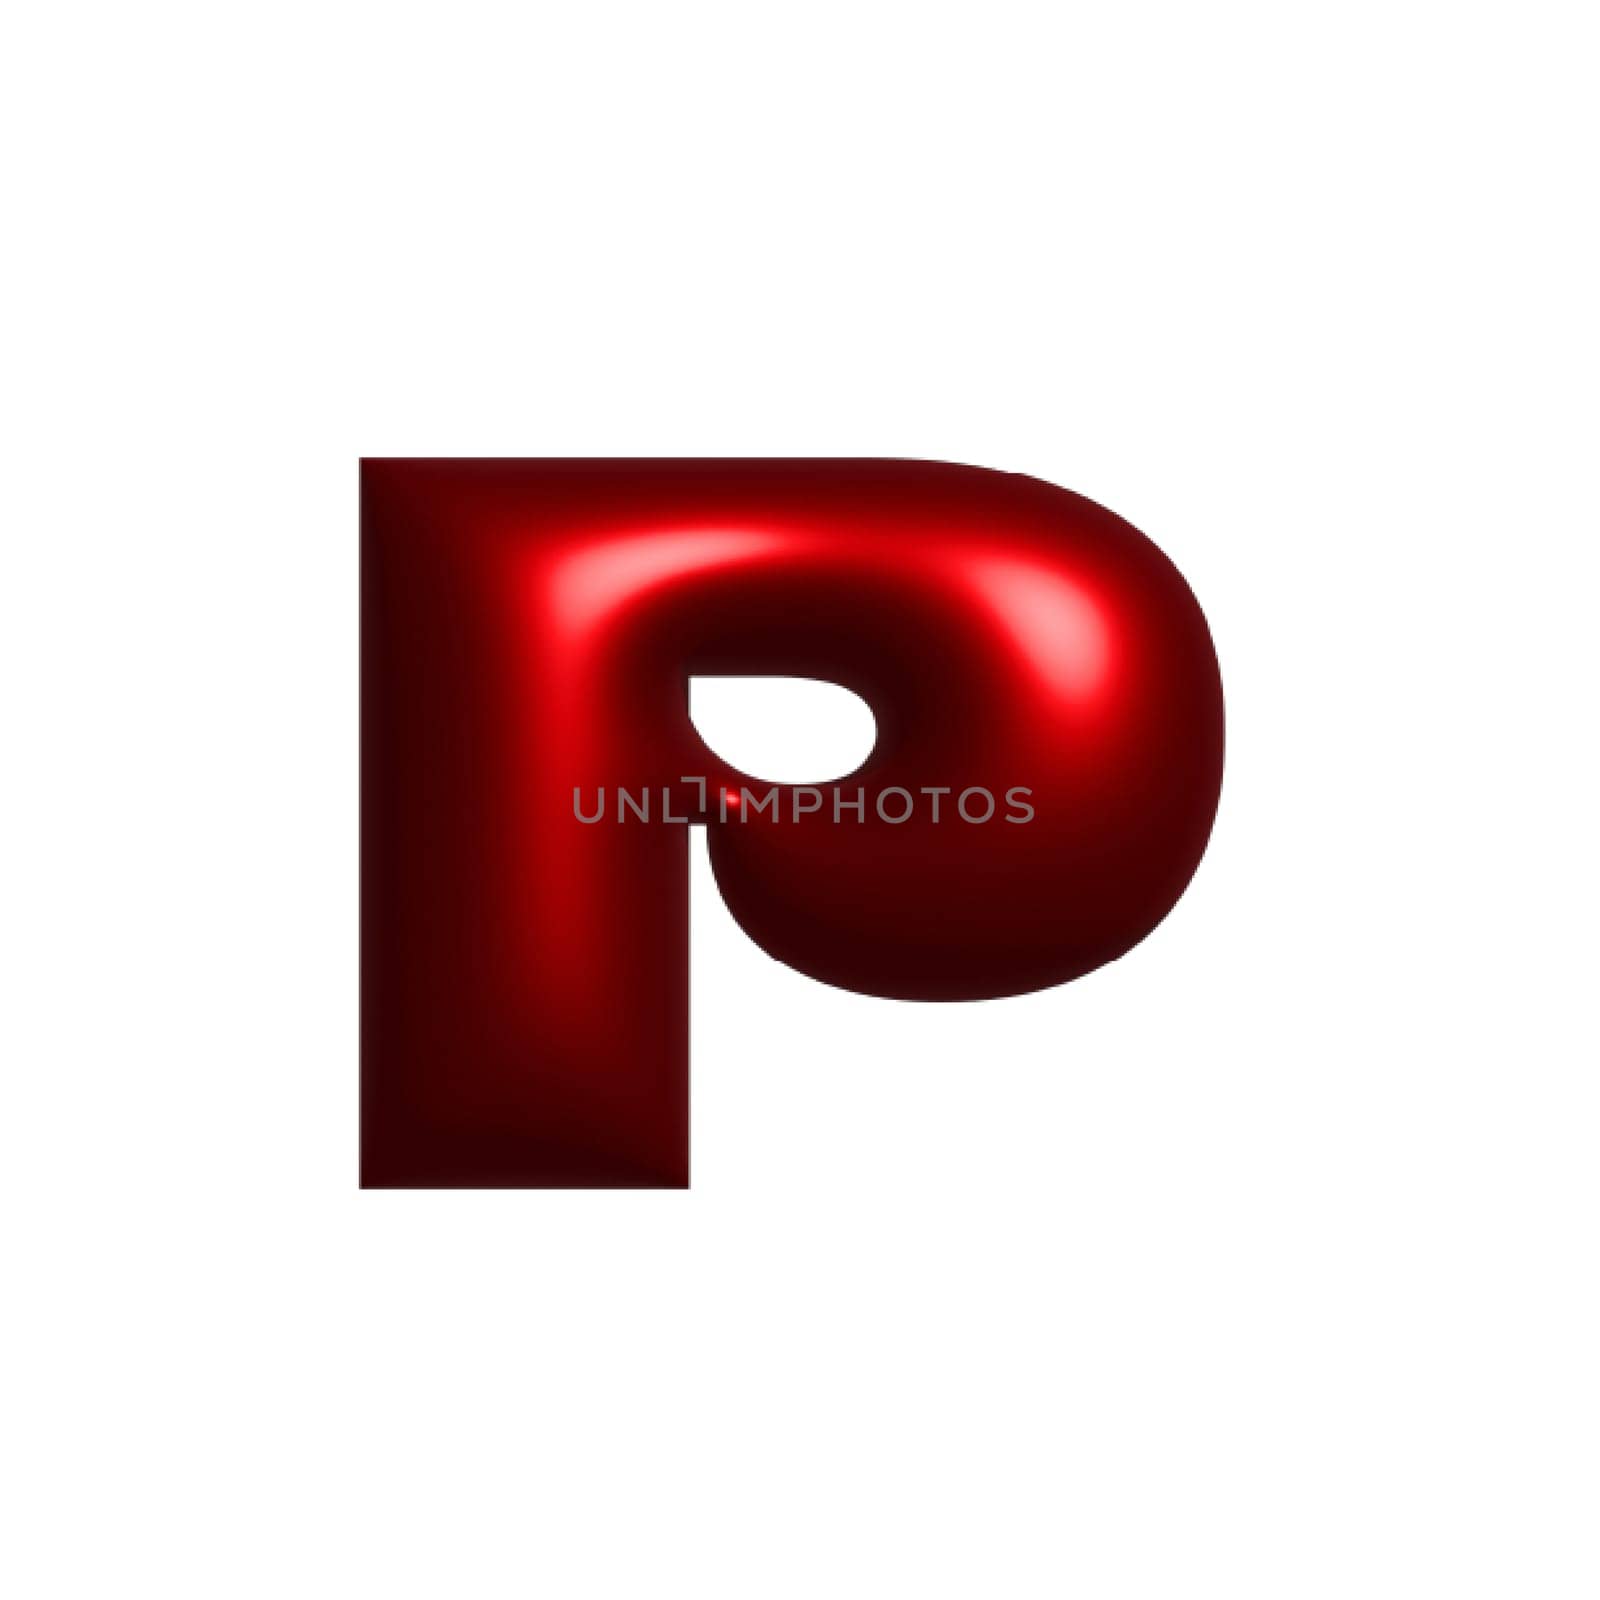 Red shiny metal shiny reflective letter P 3D illustration